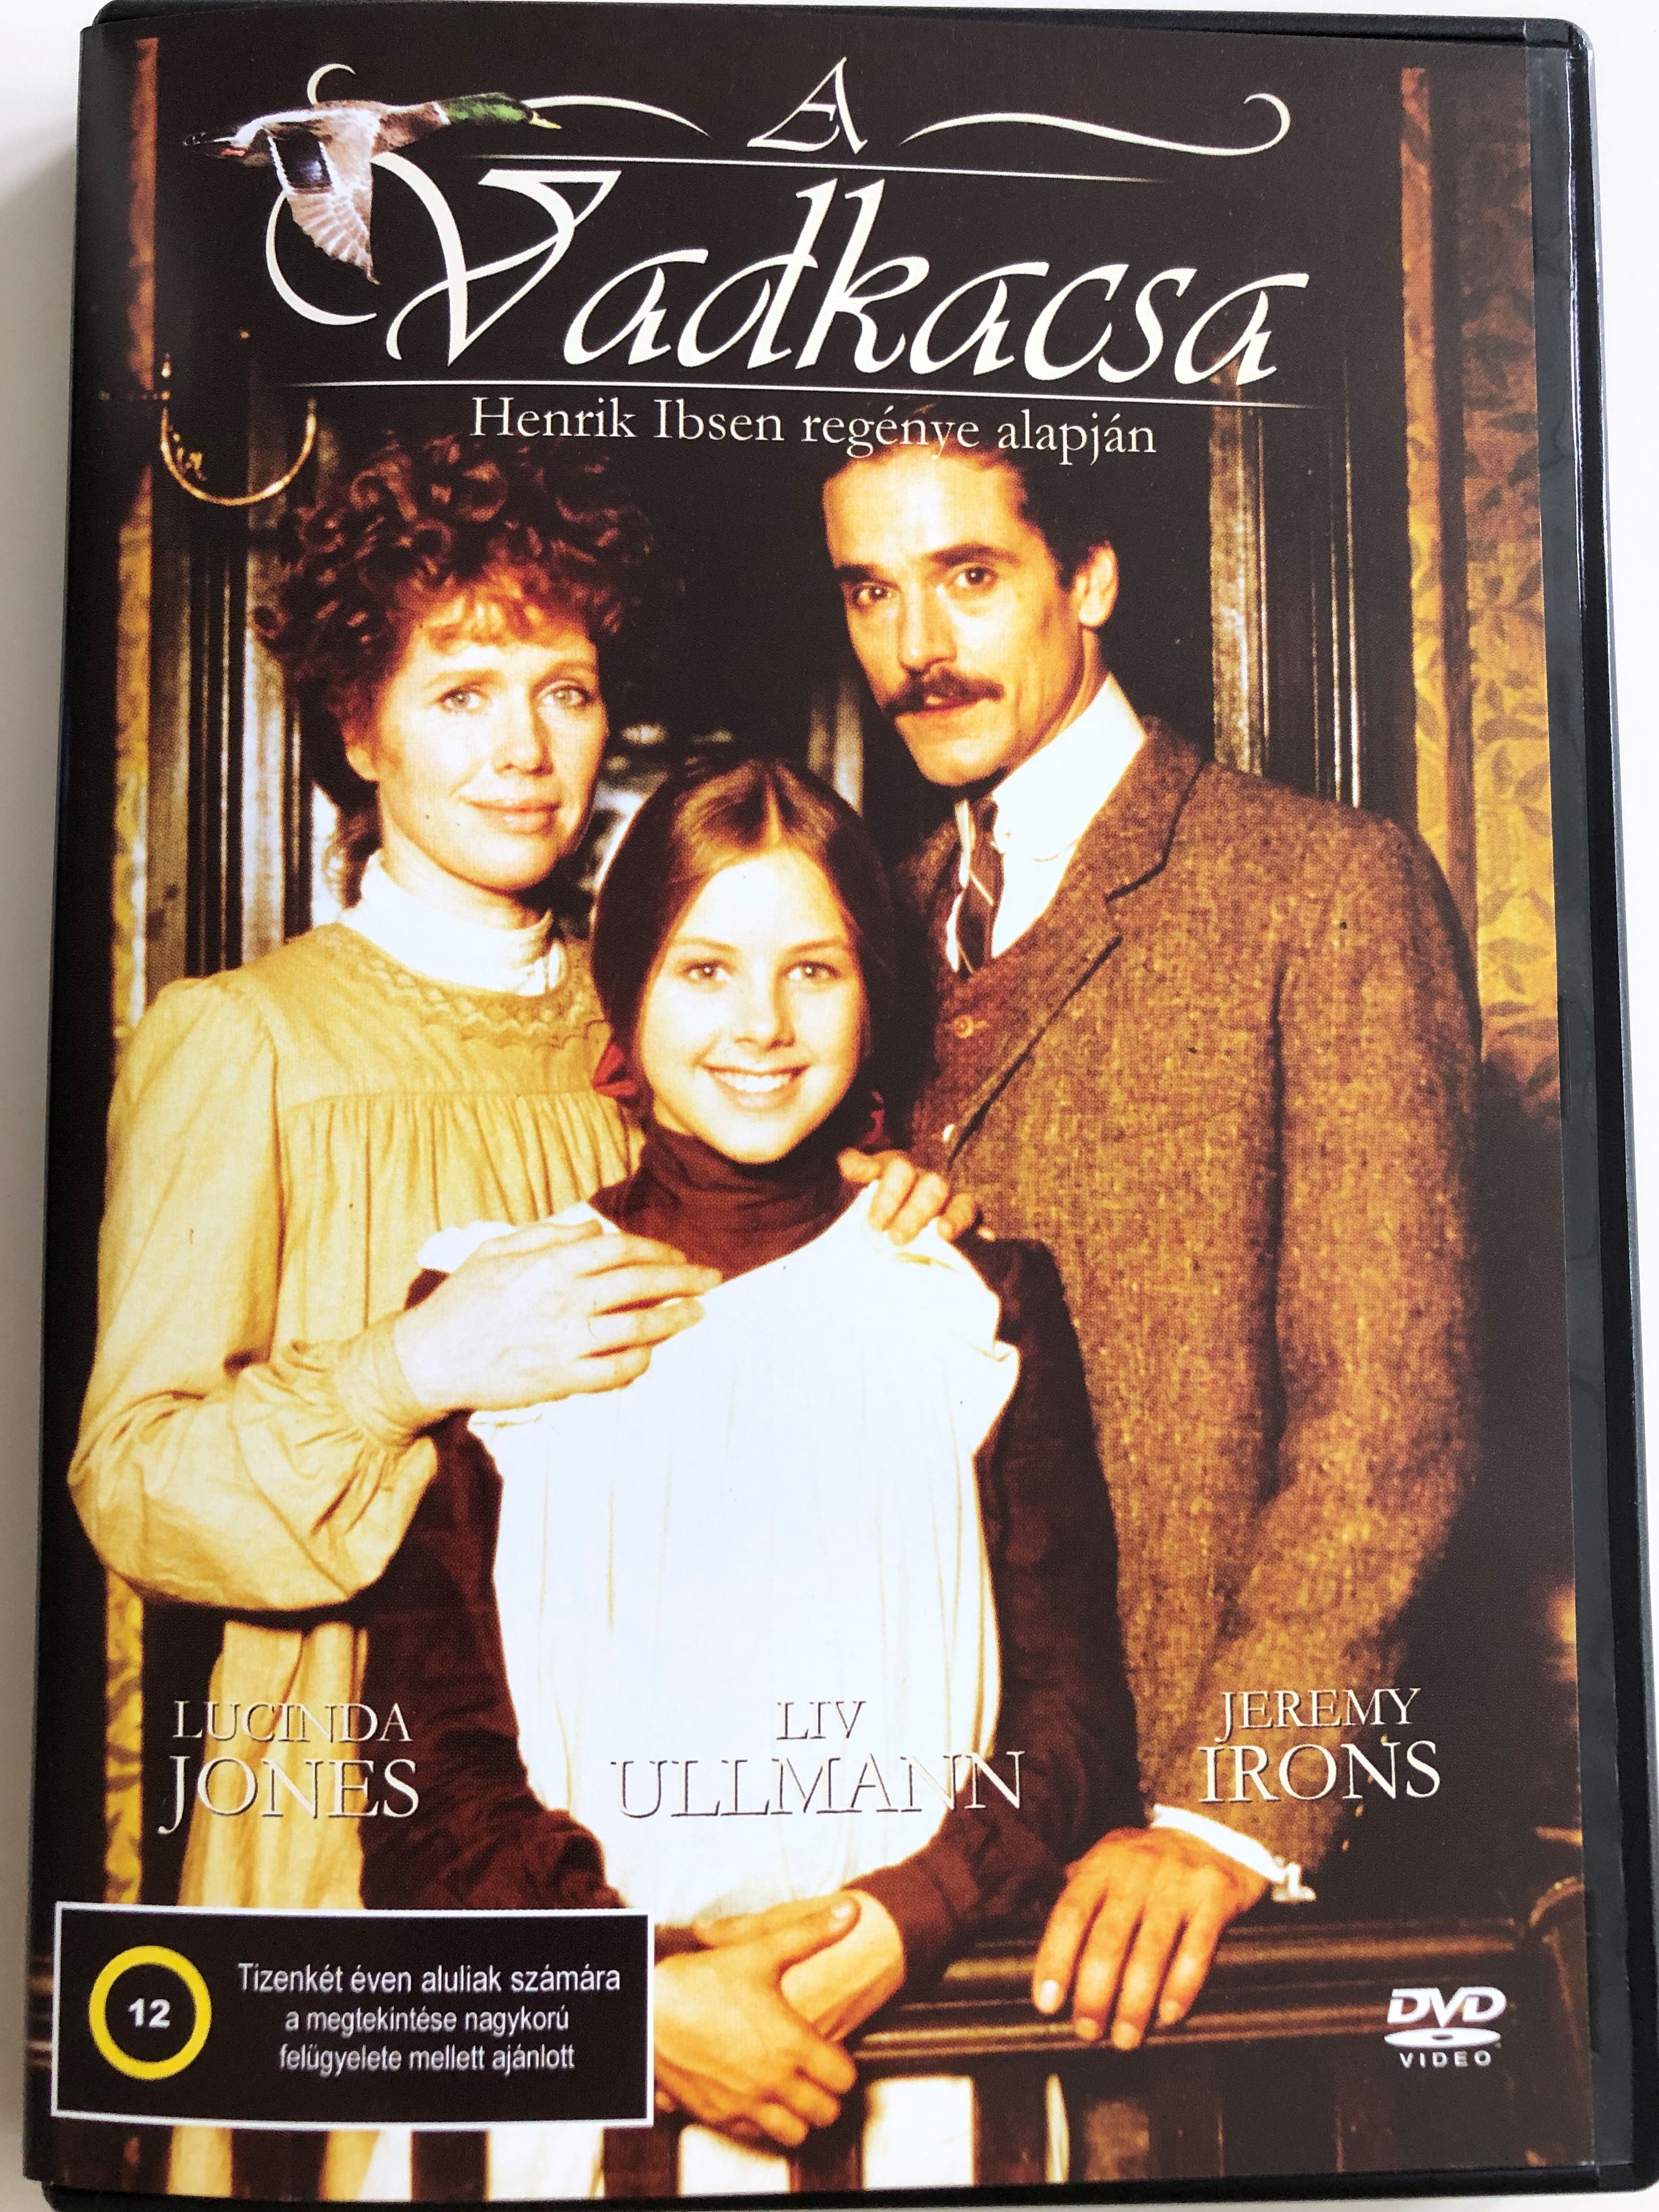 the-wild-duck-dvd-1984-a-vadkacsa-directed-by-henri-safran-starring-liv-ullmann-jeremy-irons-lucinda-jones-john-meillon-based-on-henrik-ibsen-s-novel-1-.jpg